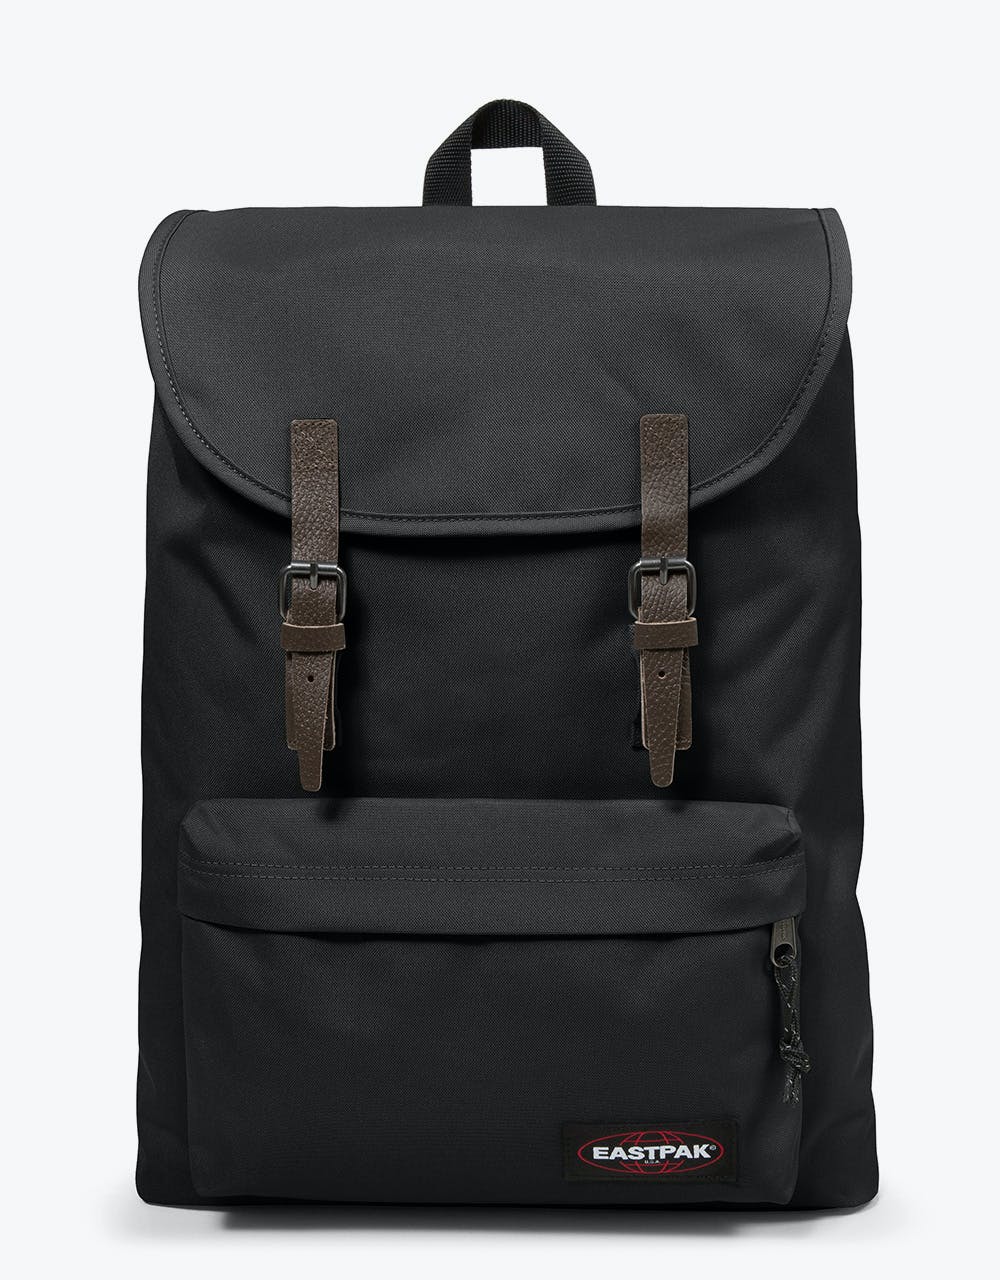 Eastpak London Backpack - Black – Route One